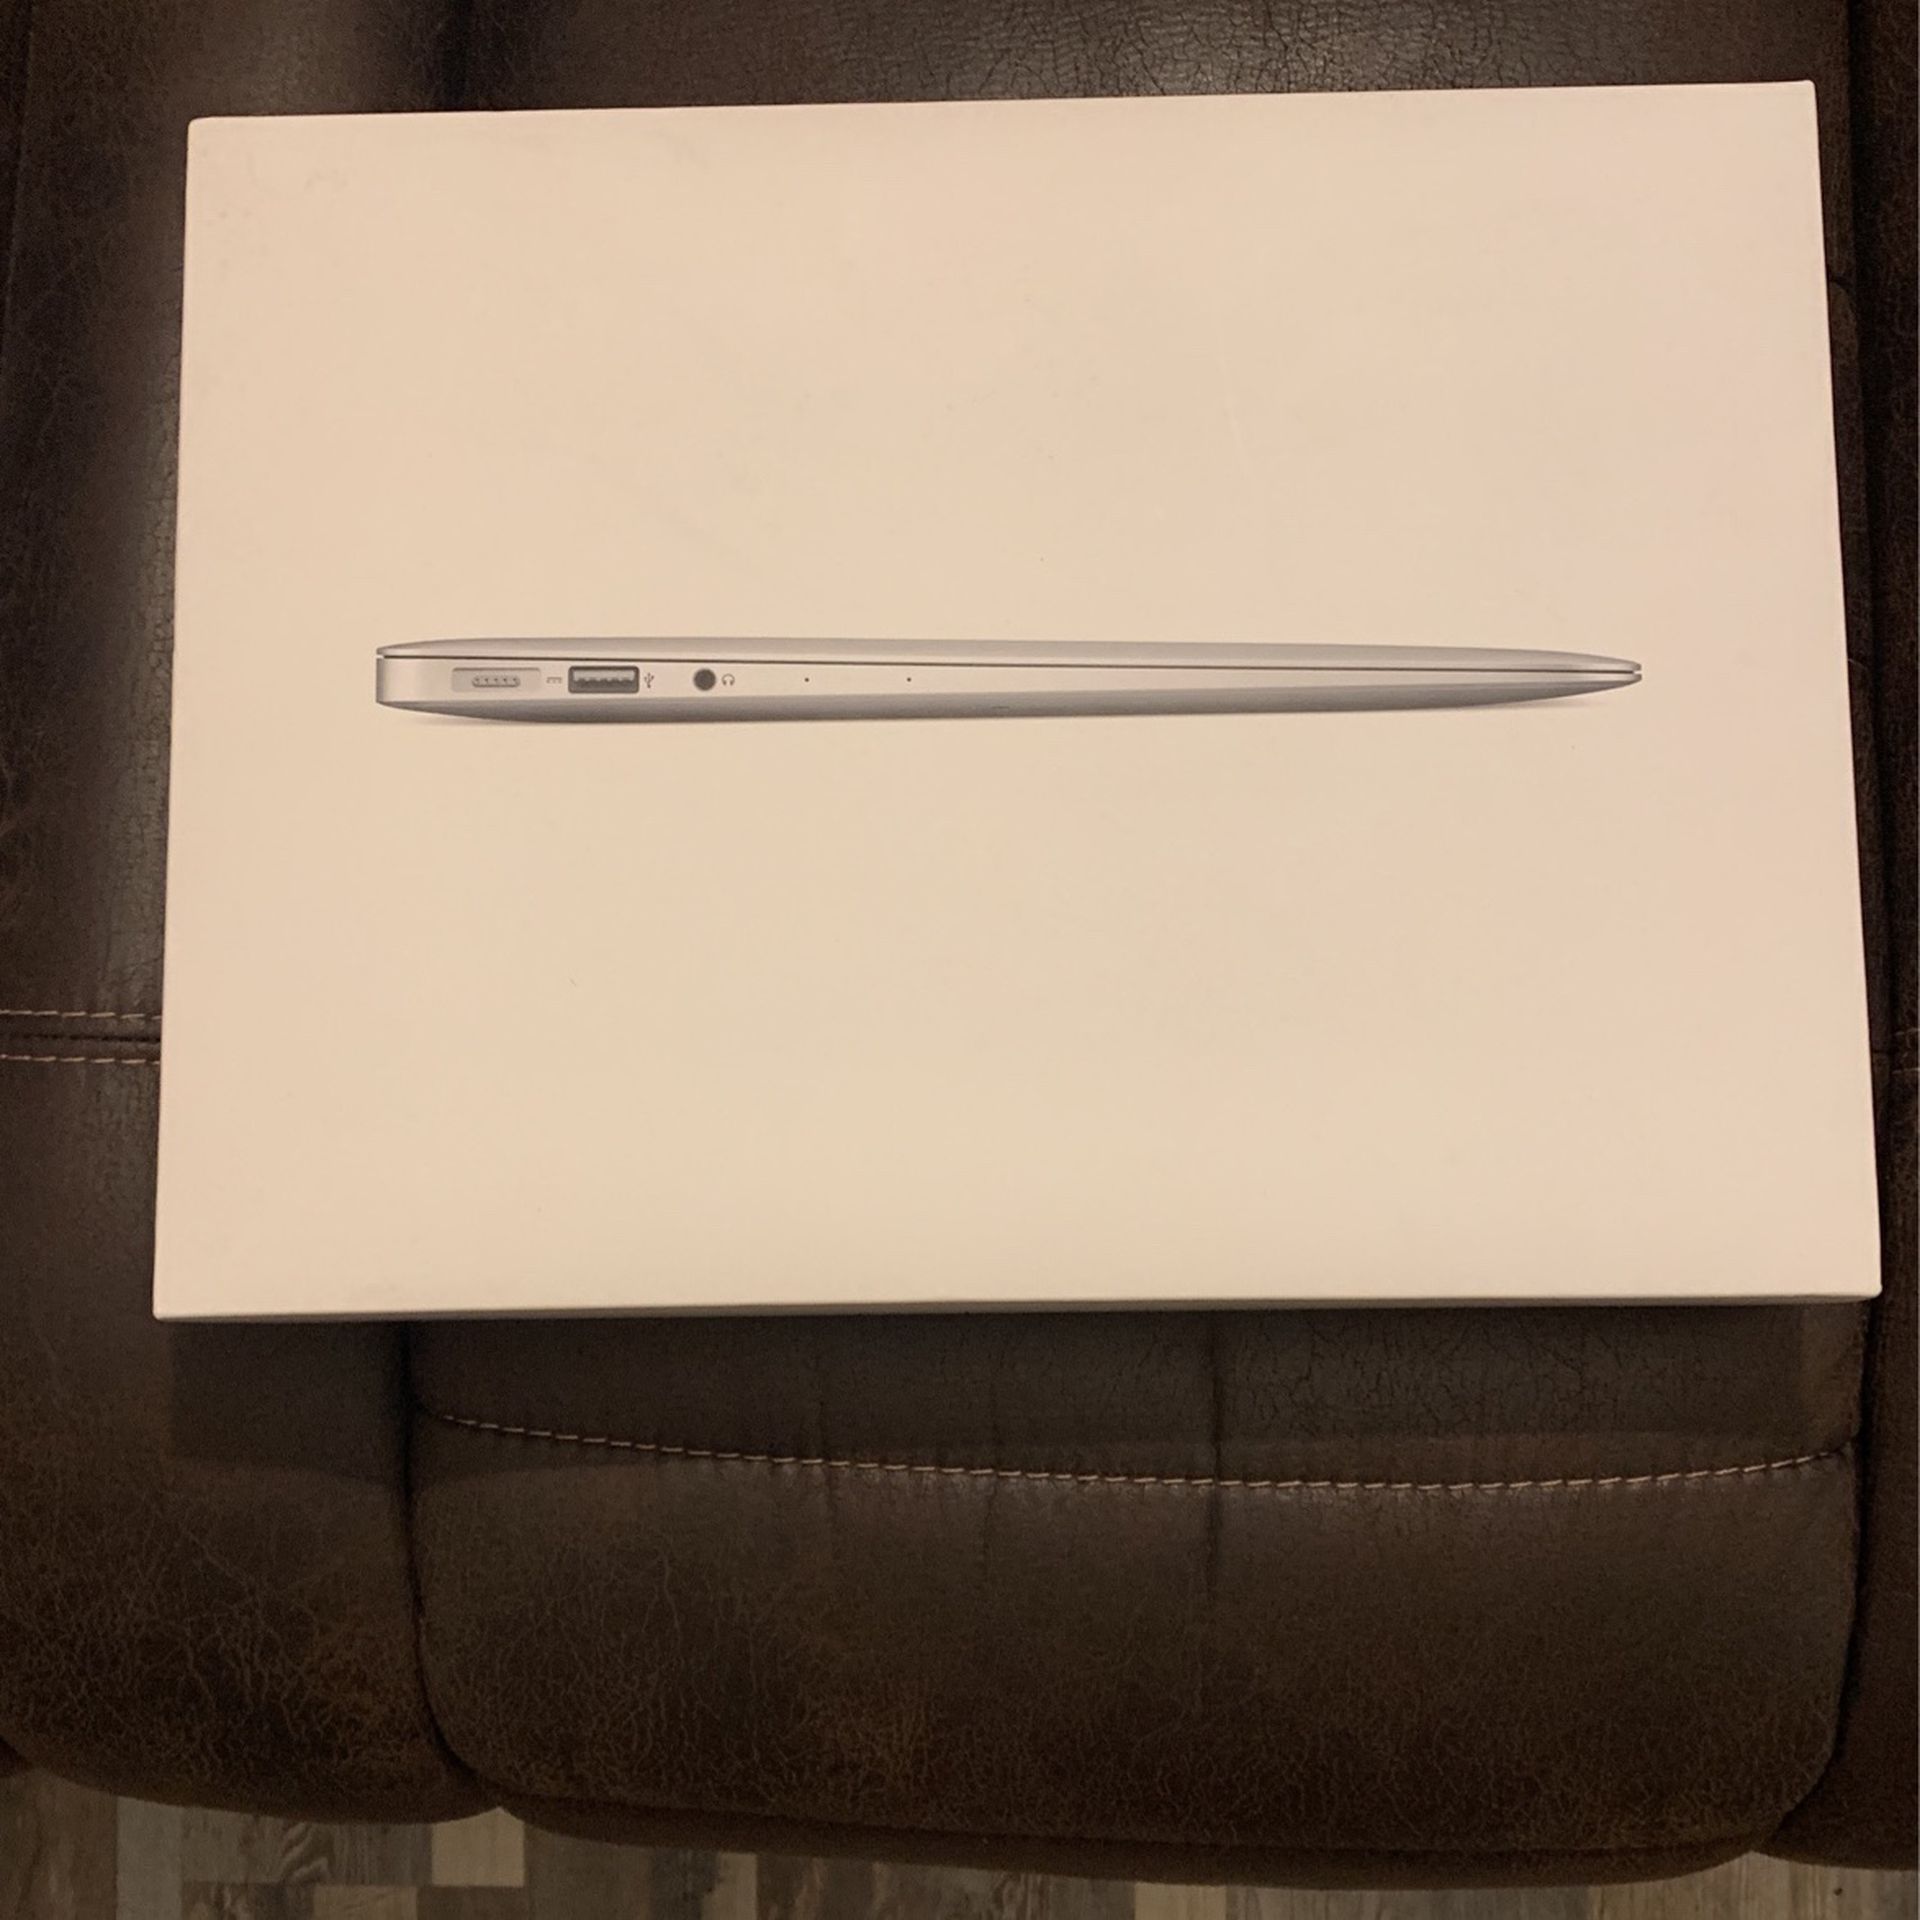 Apple MacBook Air 13 Inch